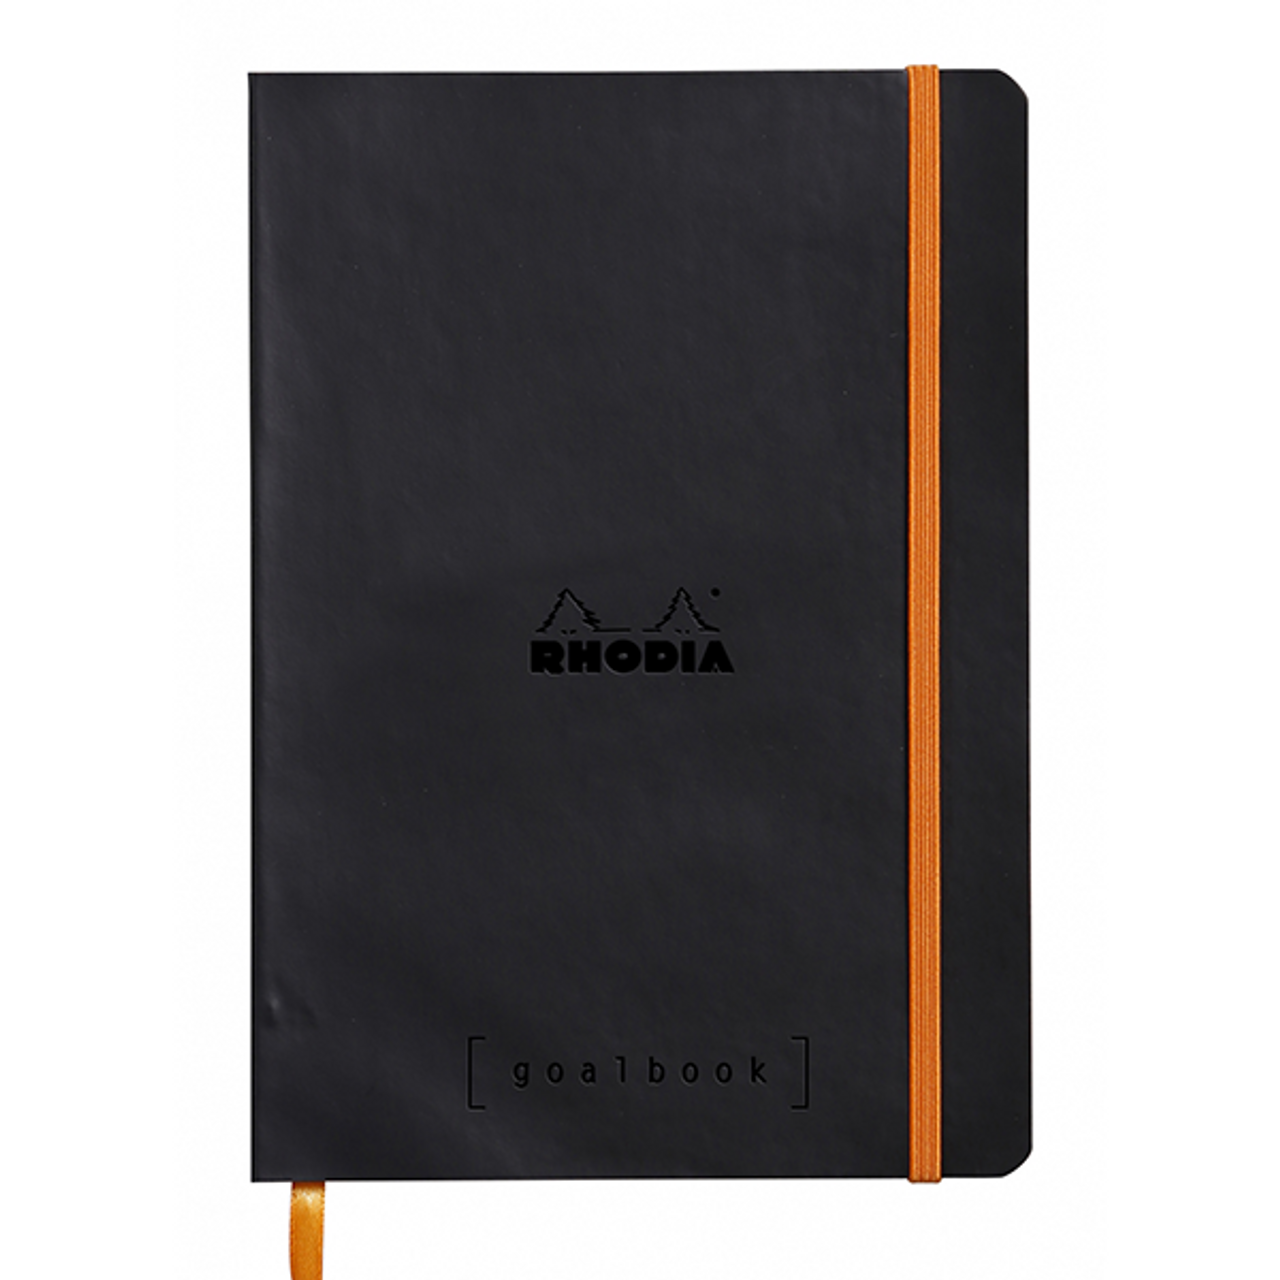 Rhodia Dot Grid Goalbook- Softcover Black - Abino Mills